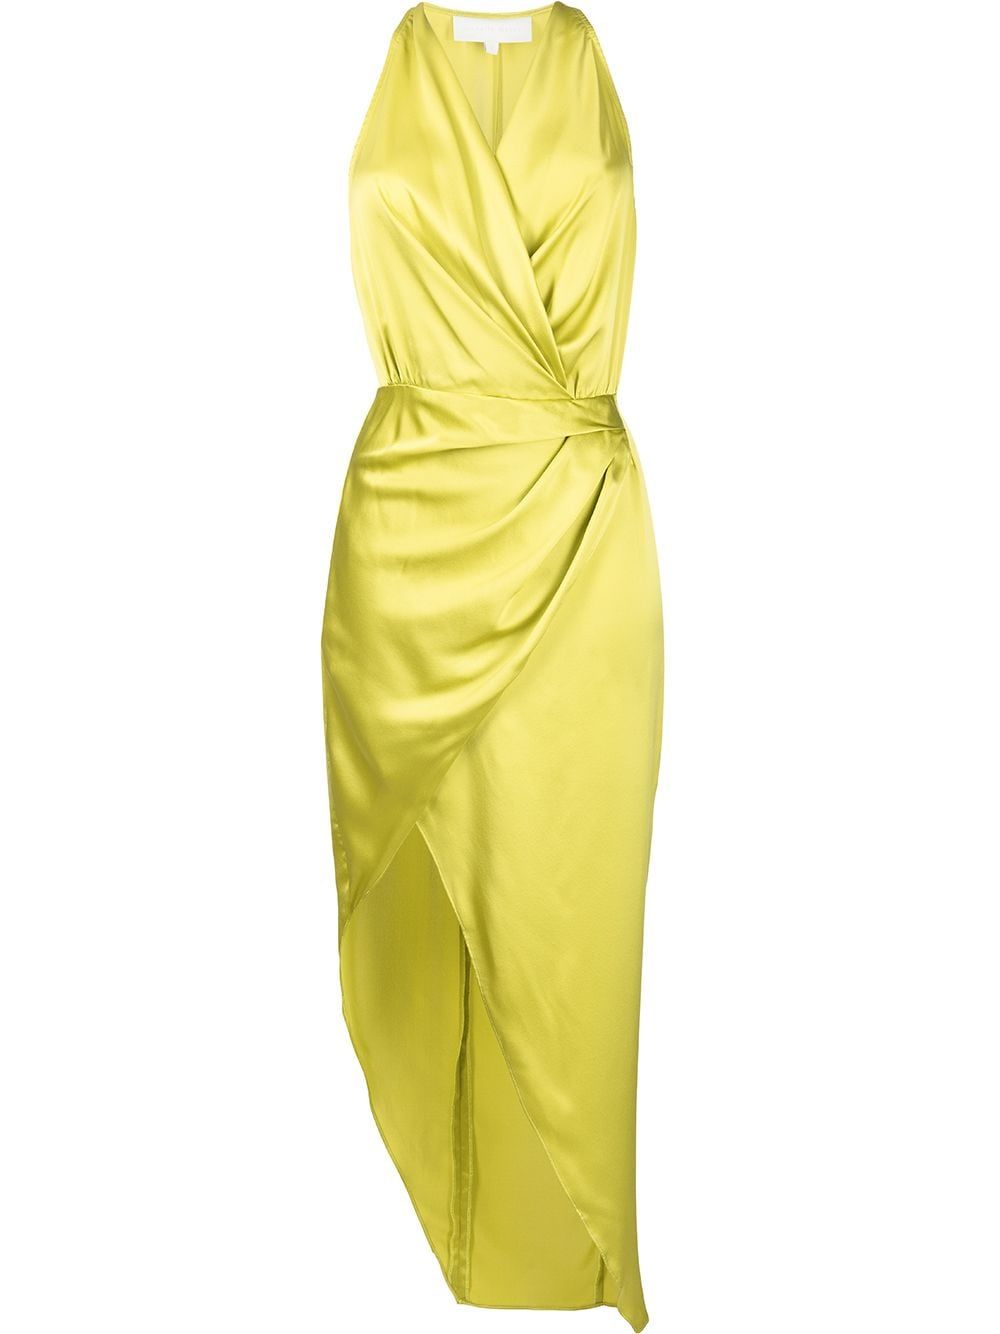 Did Nadine Njeim and Yasmine Sabri Wear The Same Yellow Dress? | Harper ...